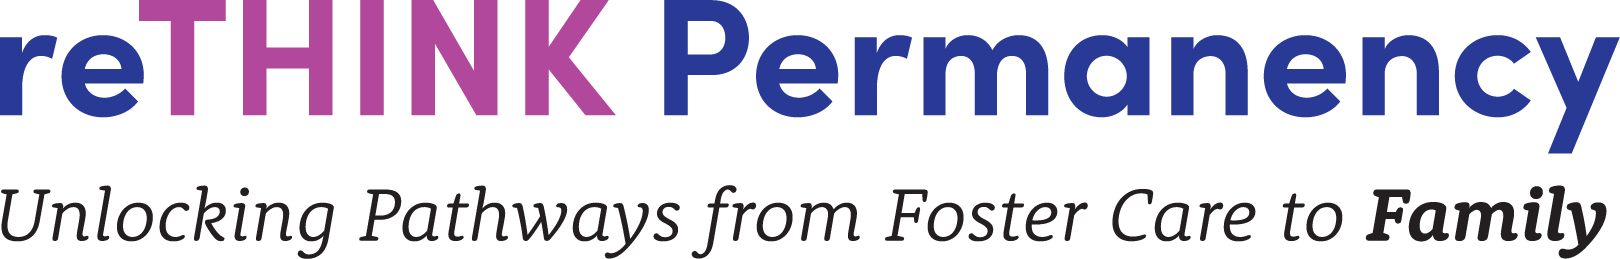 reTHINK Permanency Conference Logo-2